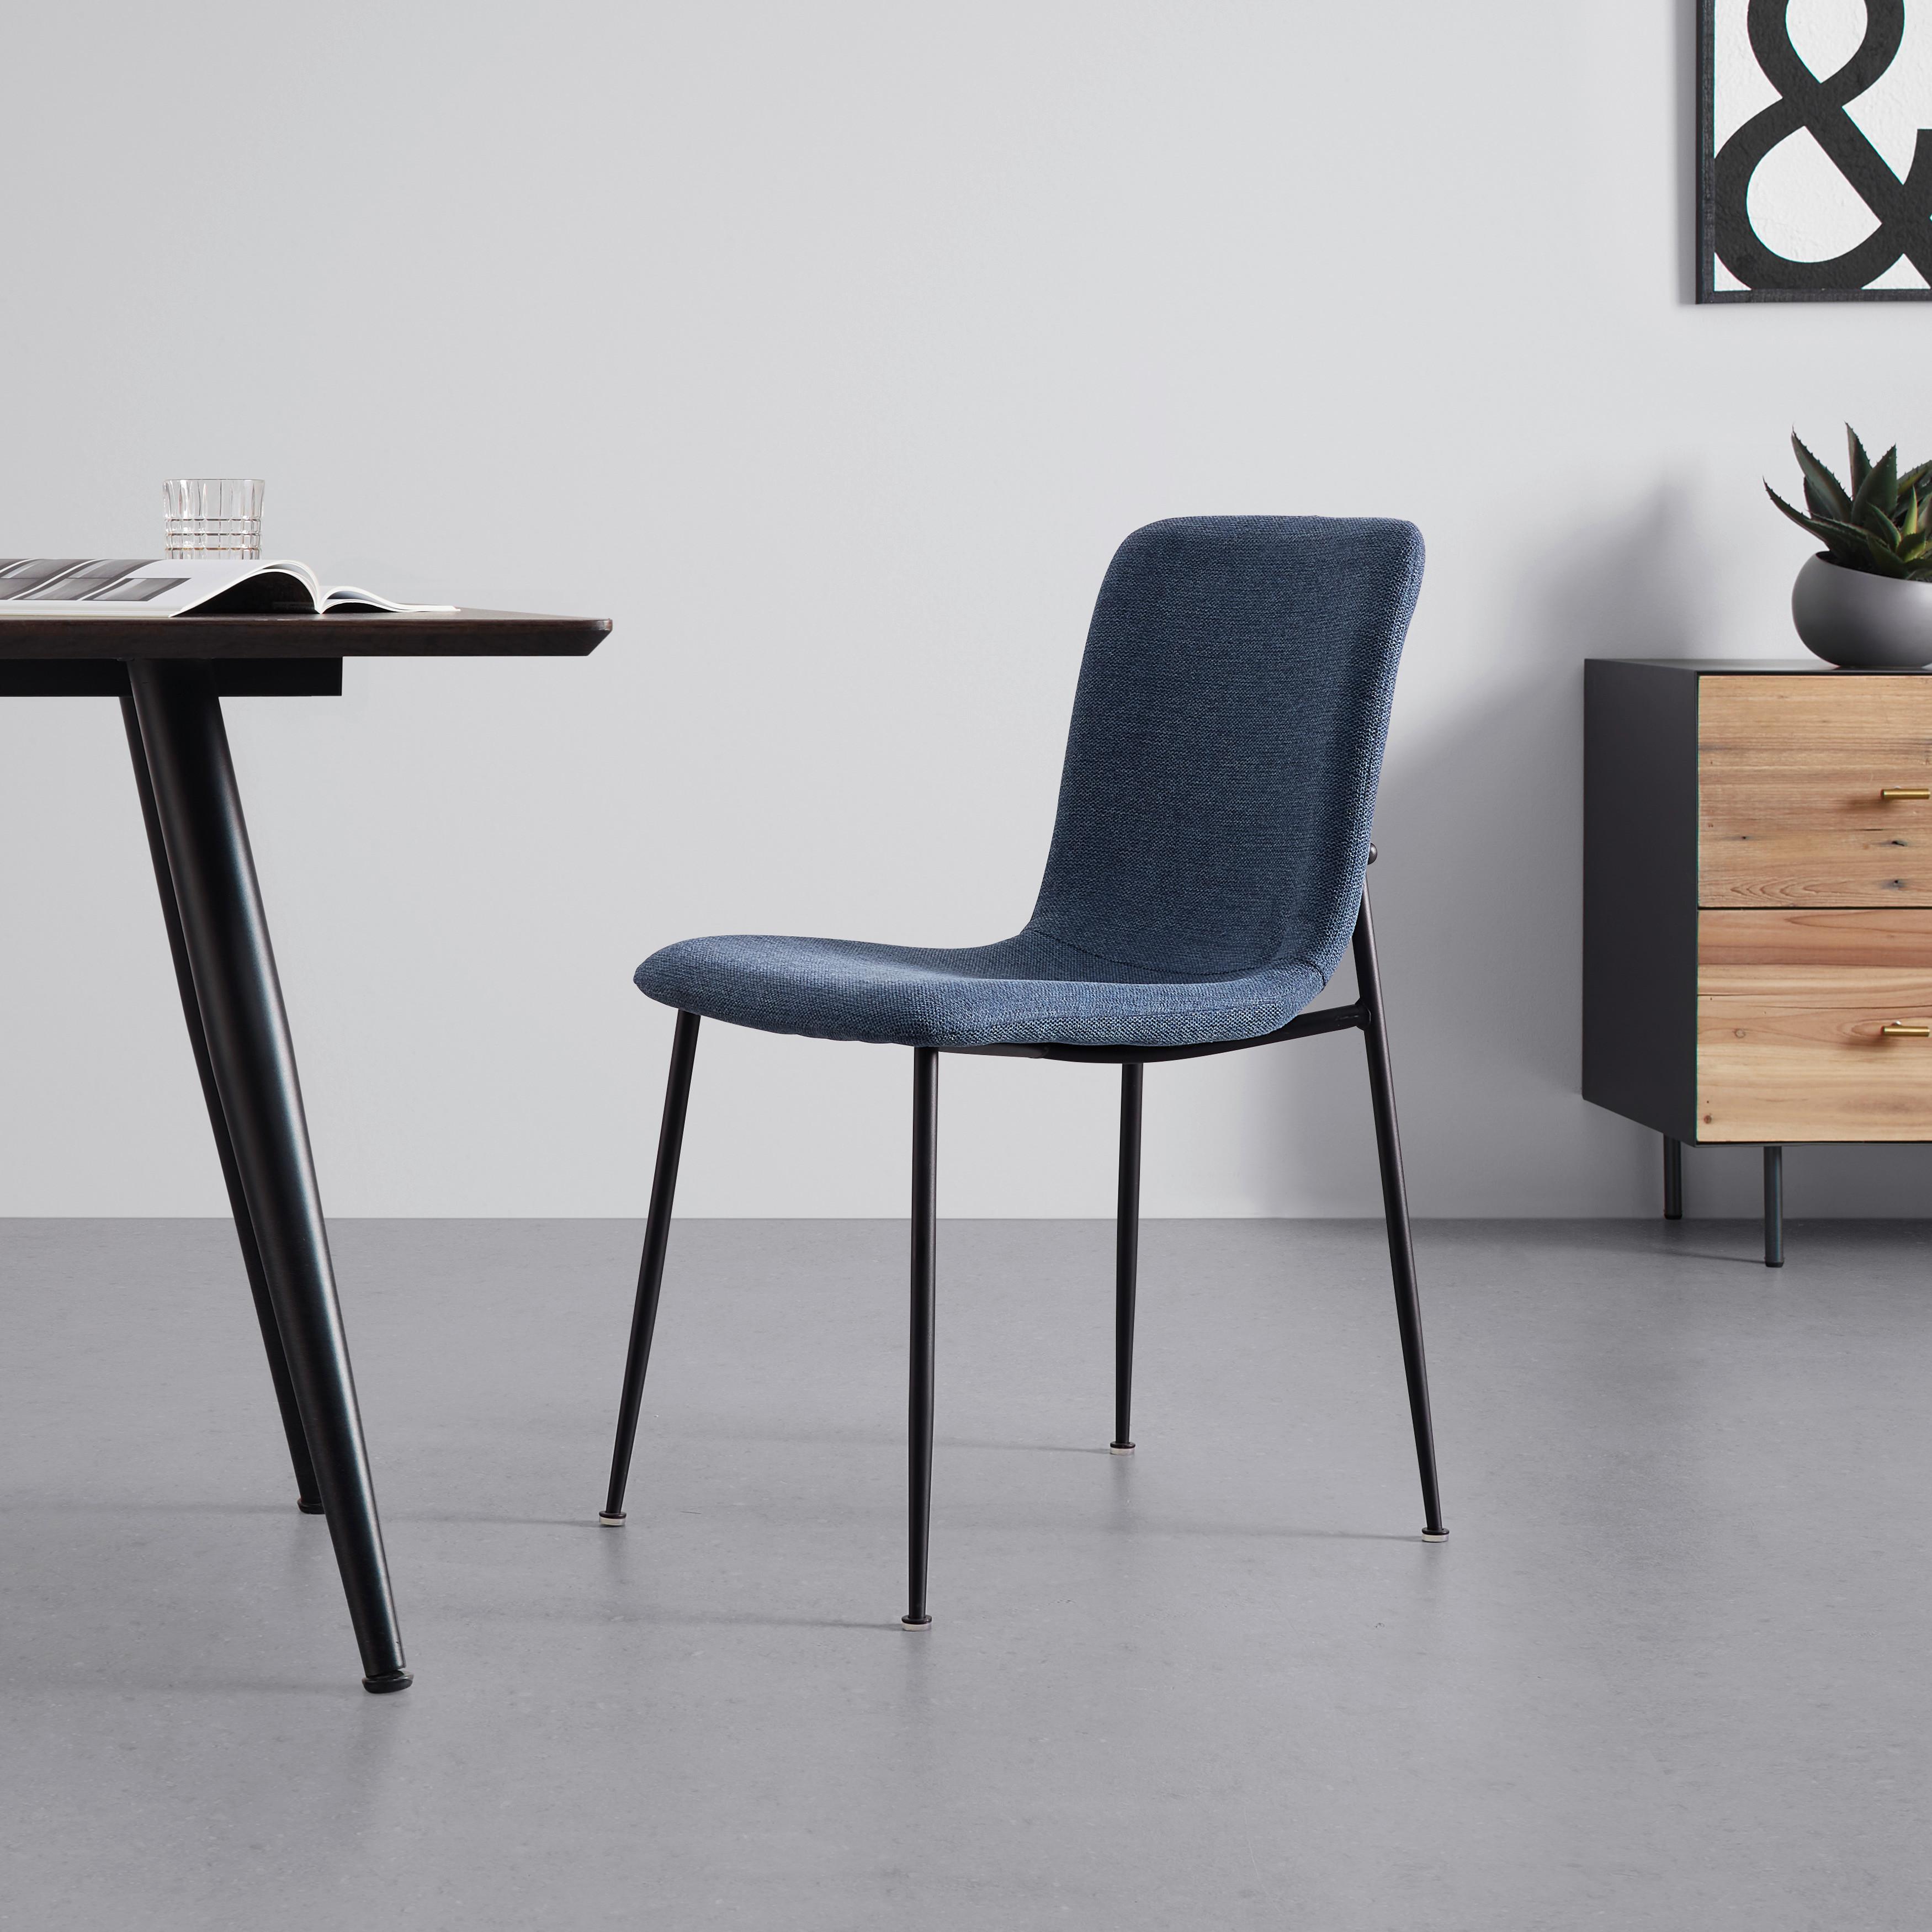 Stuhl "Nele", blau, Gepolstert - Blau/Schwarz, MODERN, Holz/Textil (43/83/56cm) - Bessagi Home